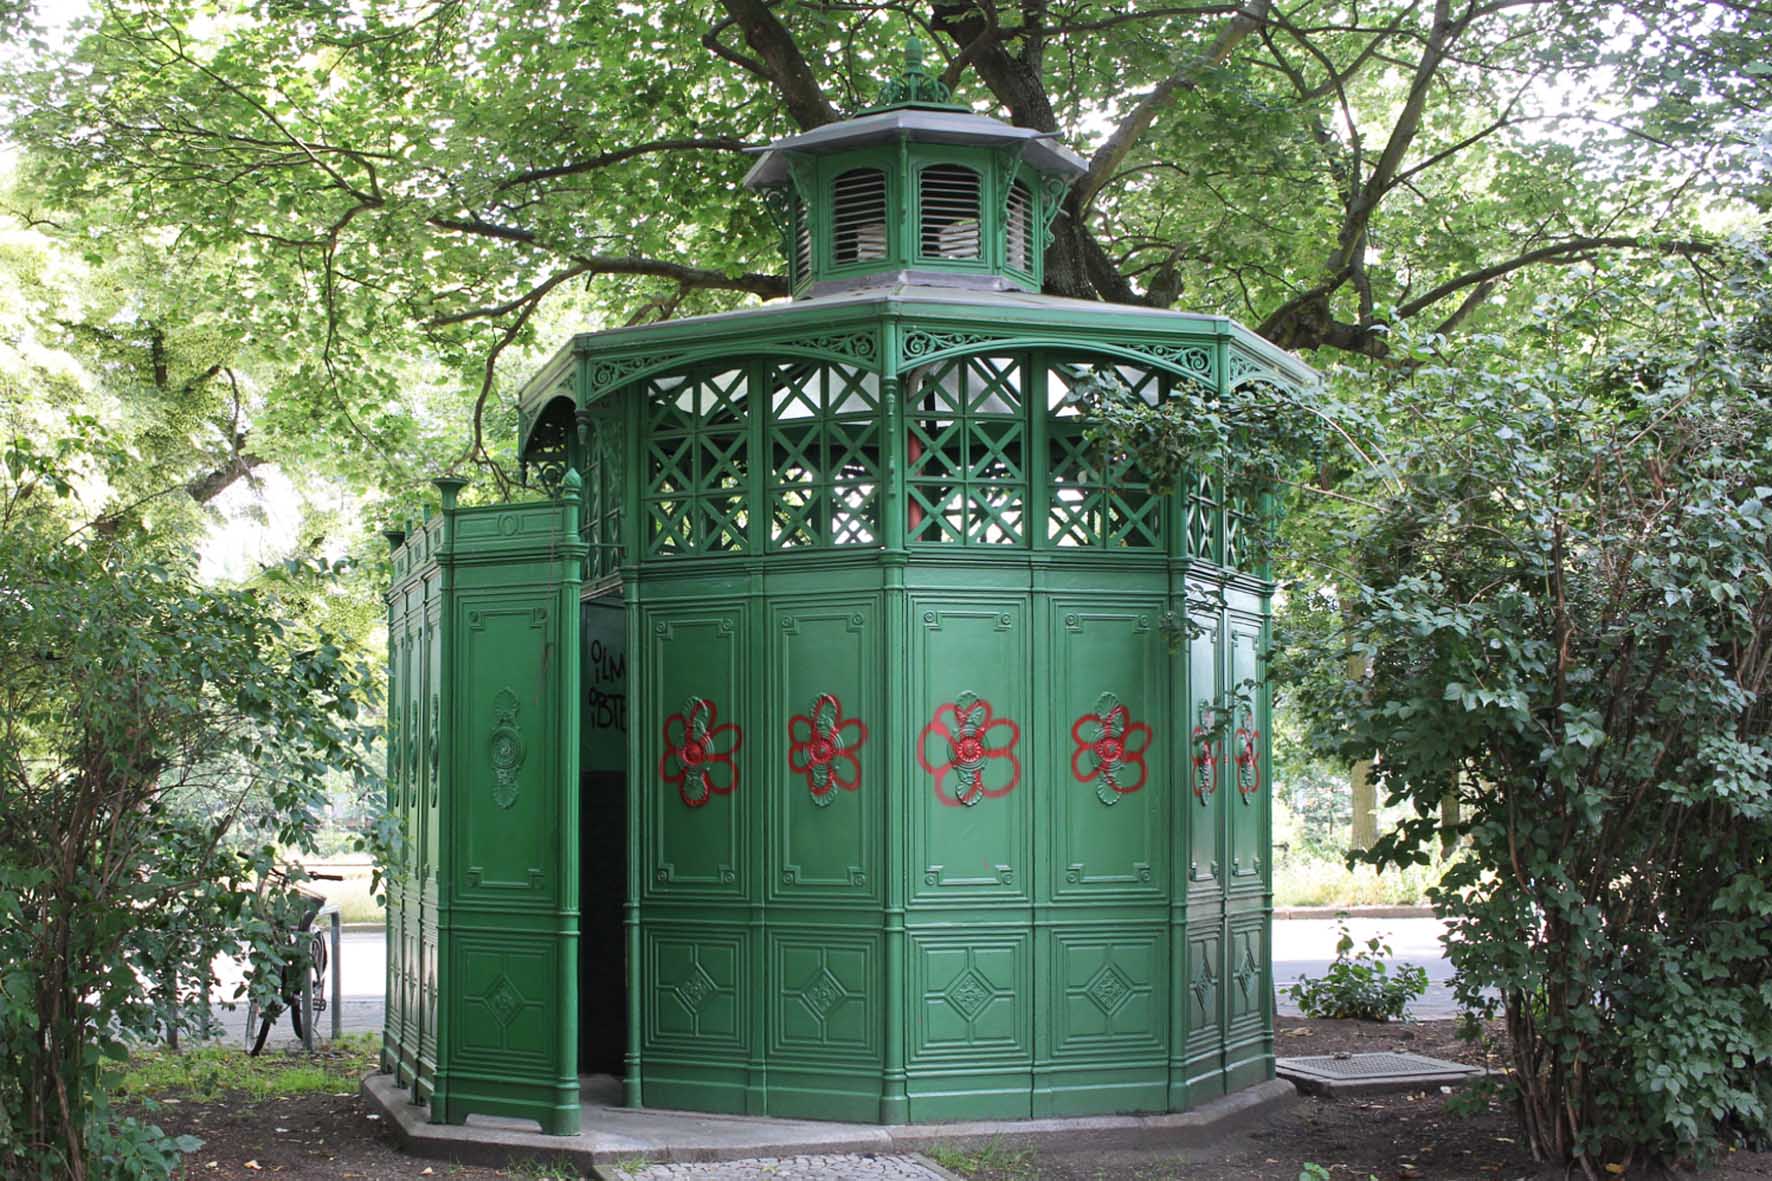 Café Achteck - Pekinger Platz - an example of Berlin's classic 19th century green cast iron public toilets